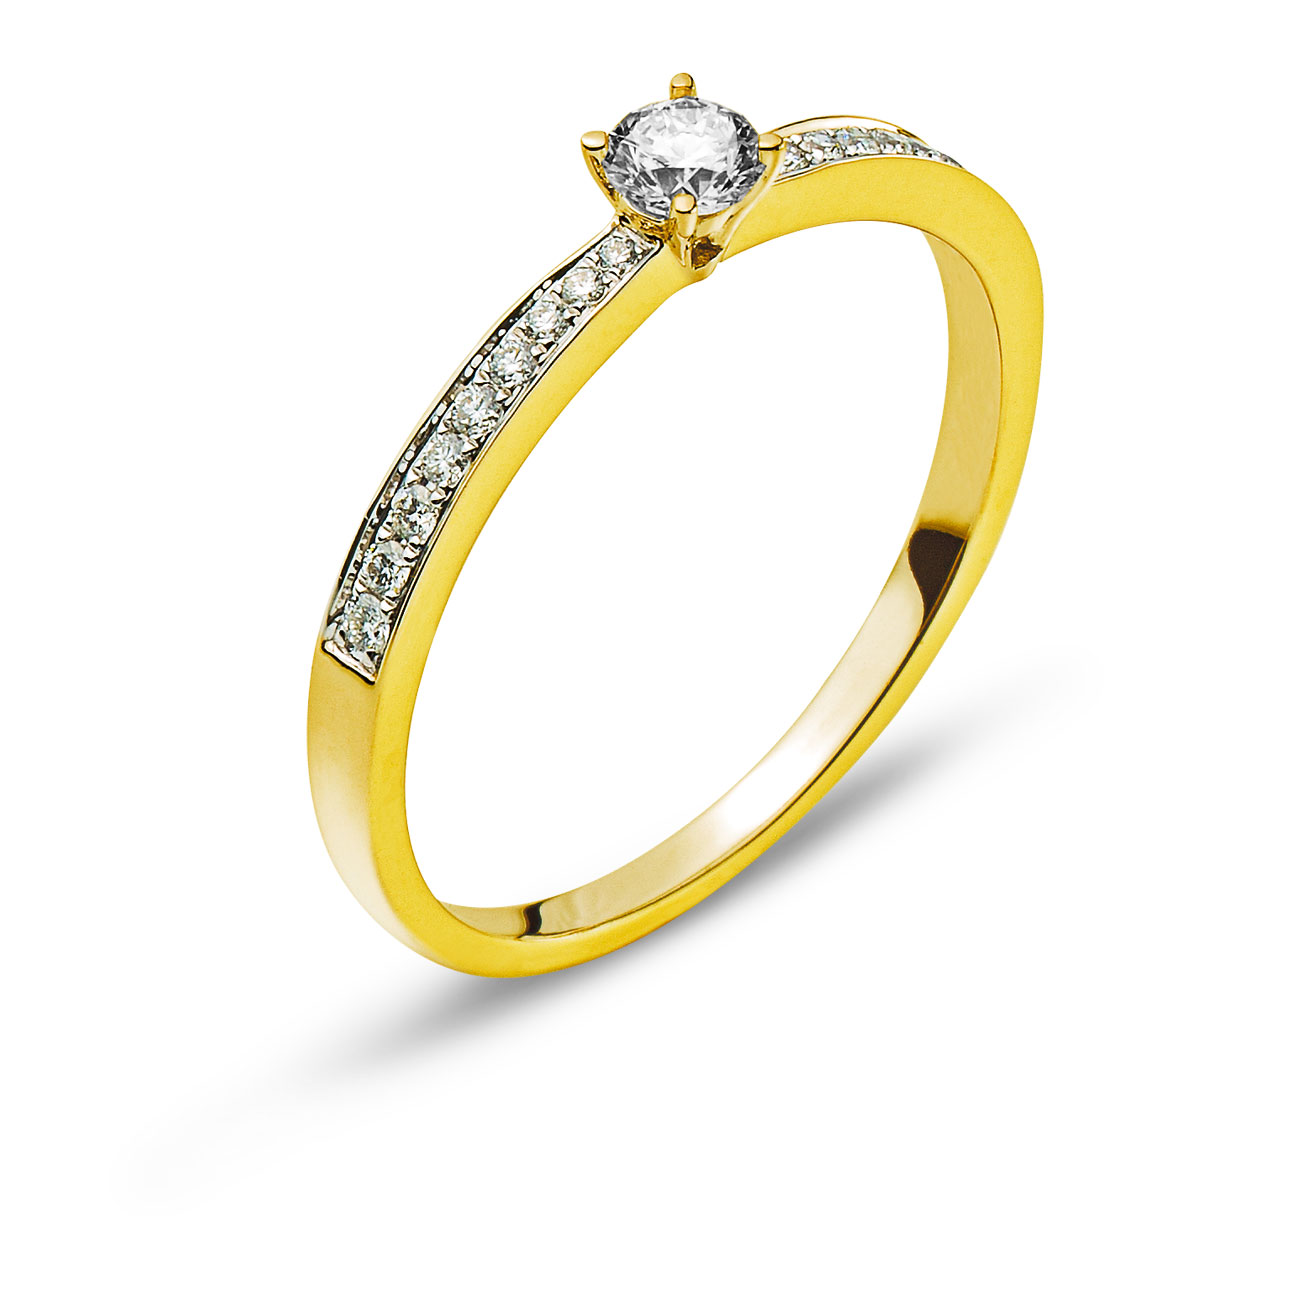 AURONOS Prestige Or jaune 18K diamants 0.36ct